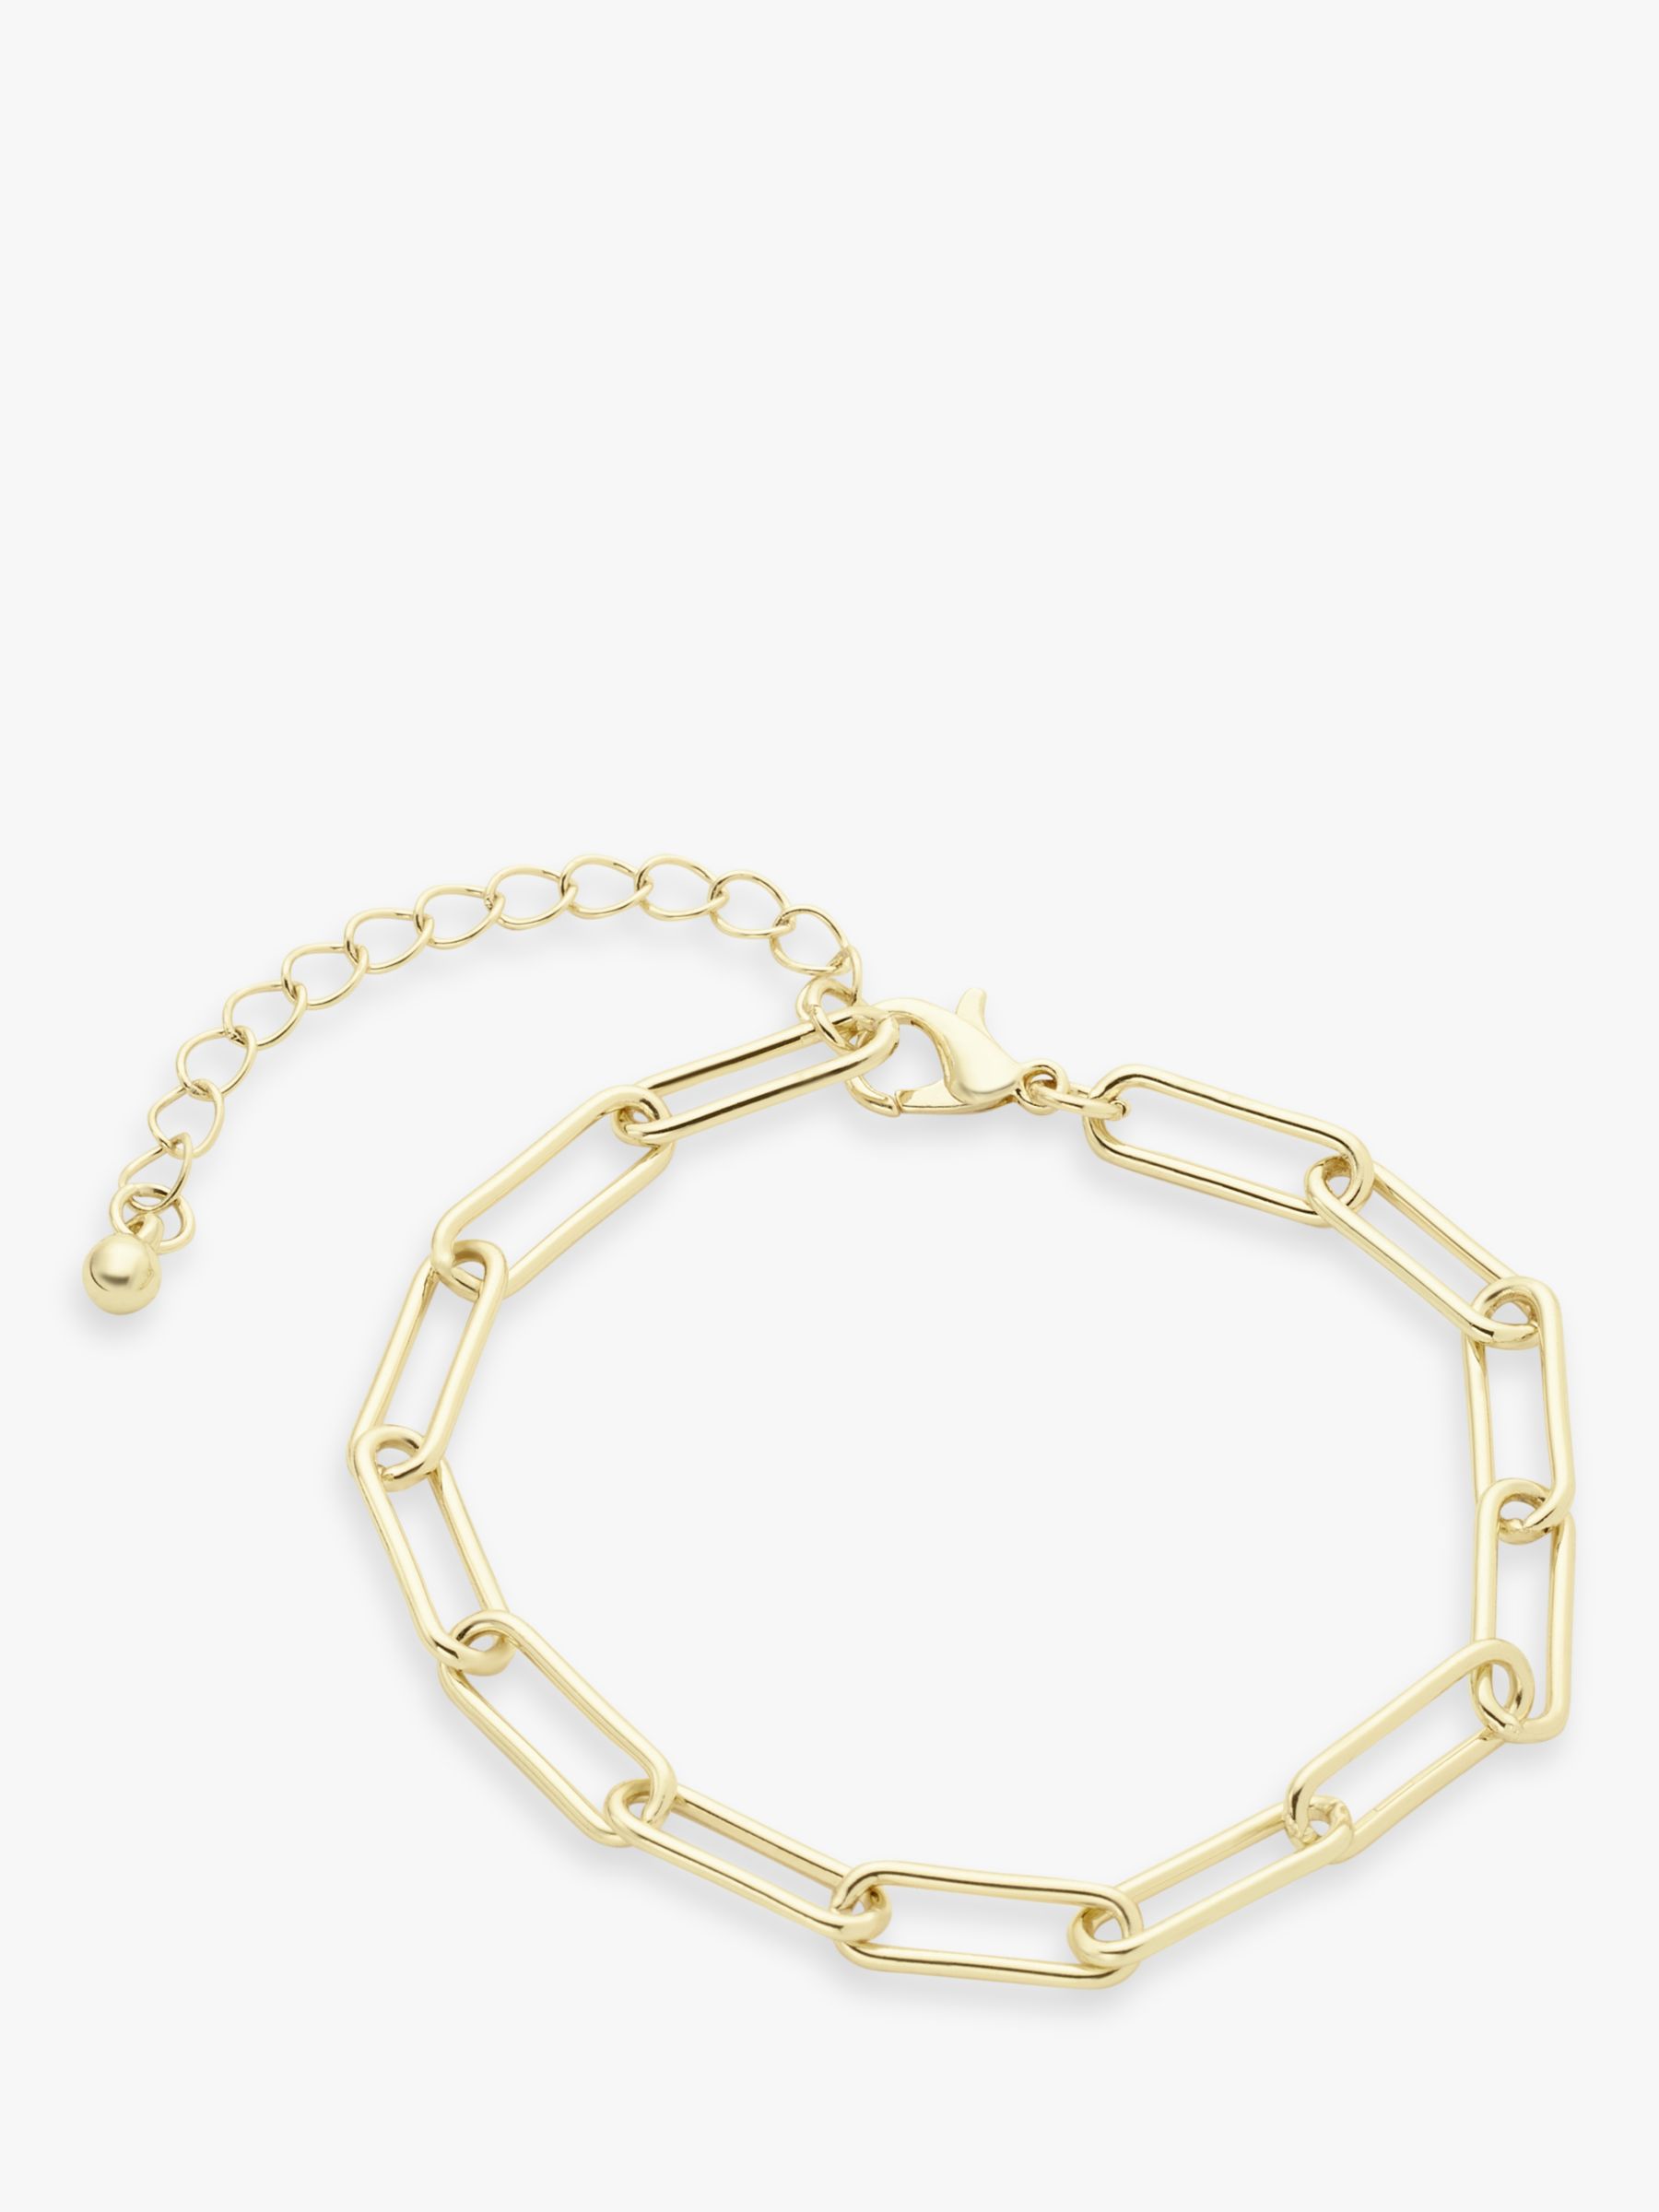 Ivory and Co Tivoli Rose Gold Dainty Crystal Toggle Bracelet